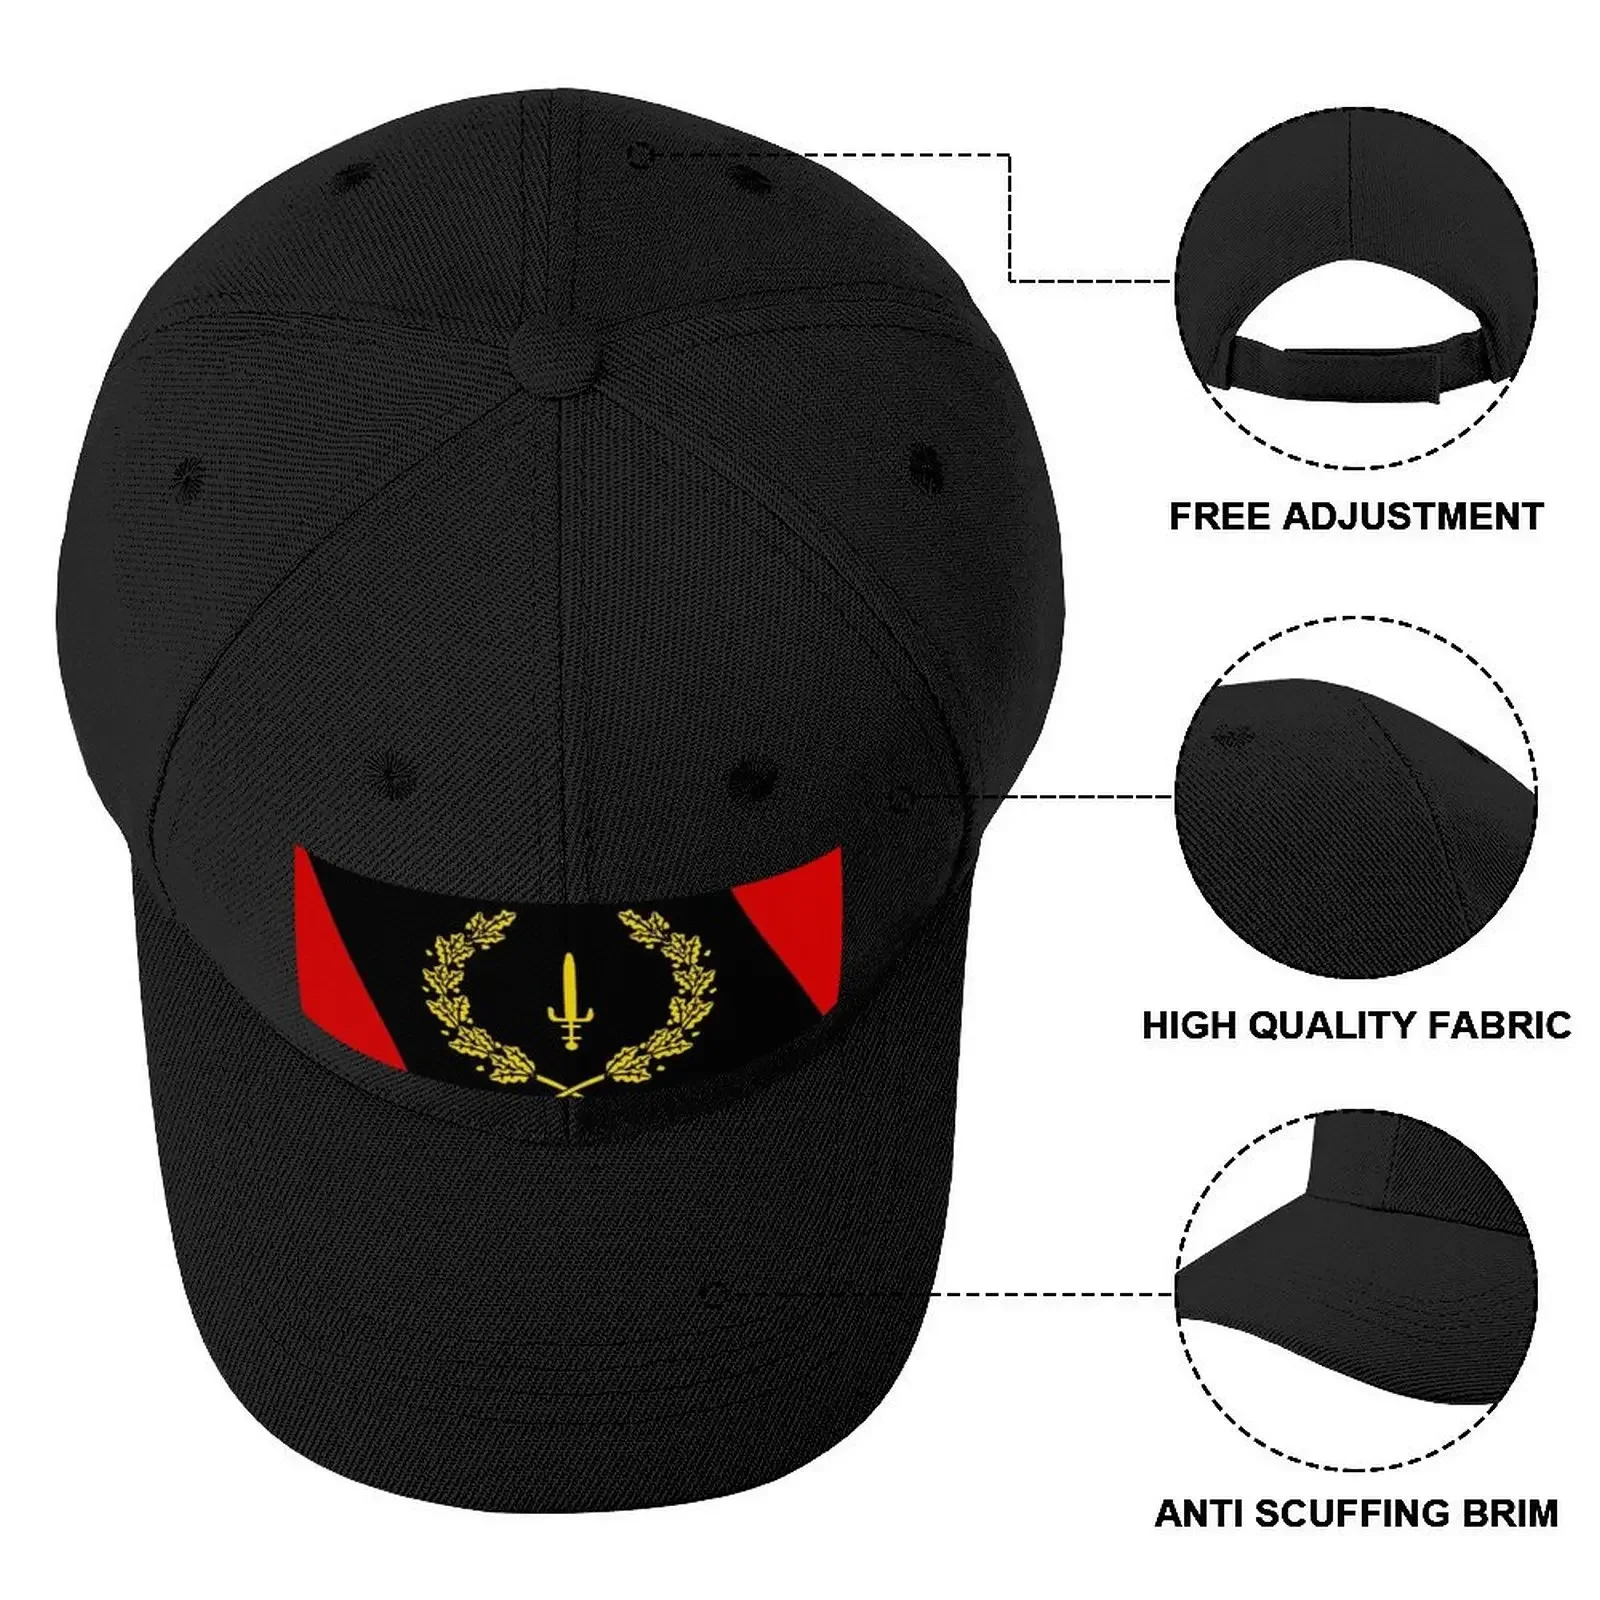 Black American Heritage Flag Baseball Cap Luxury Cap Luxury Man Hat Men's Hats Women's